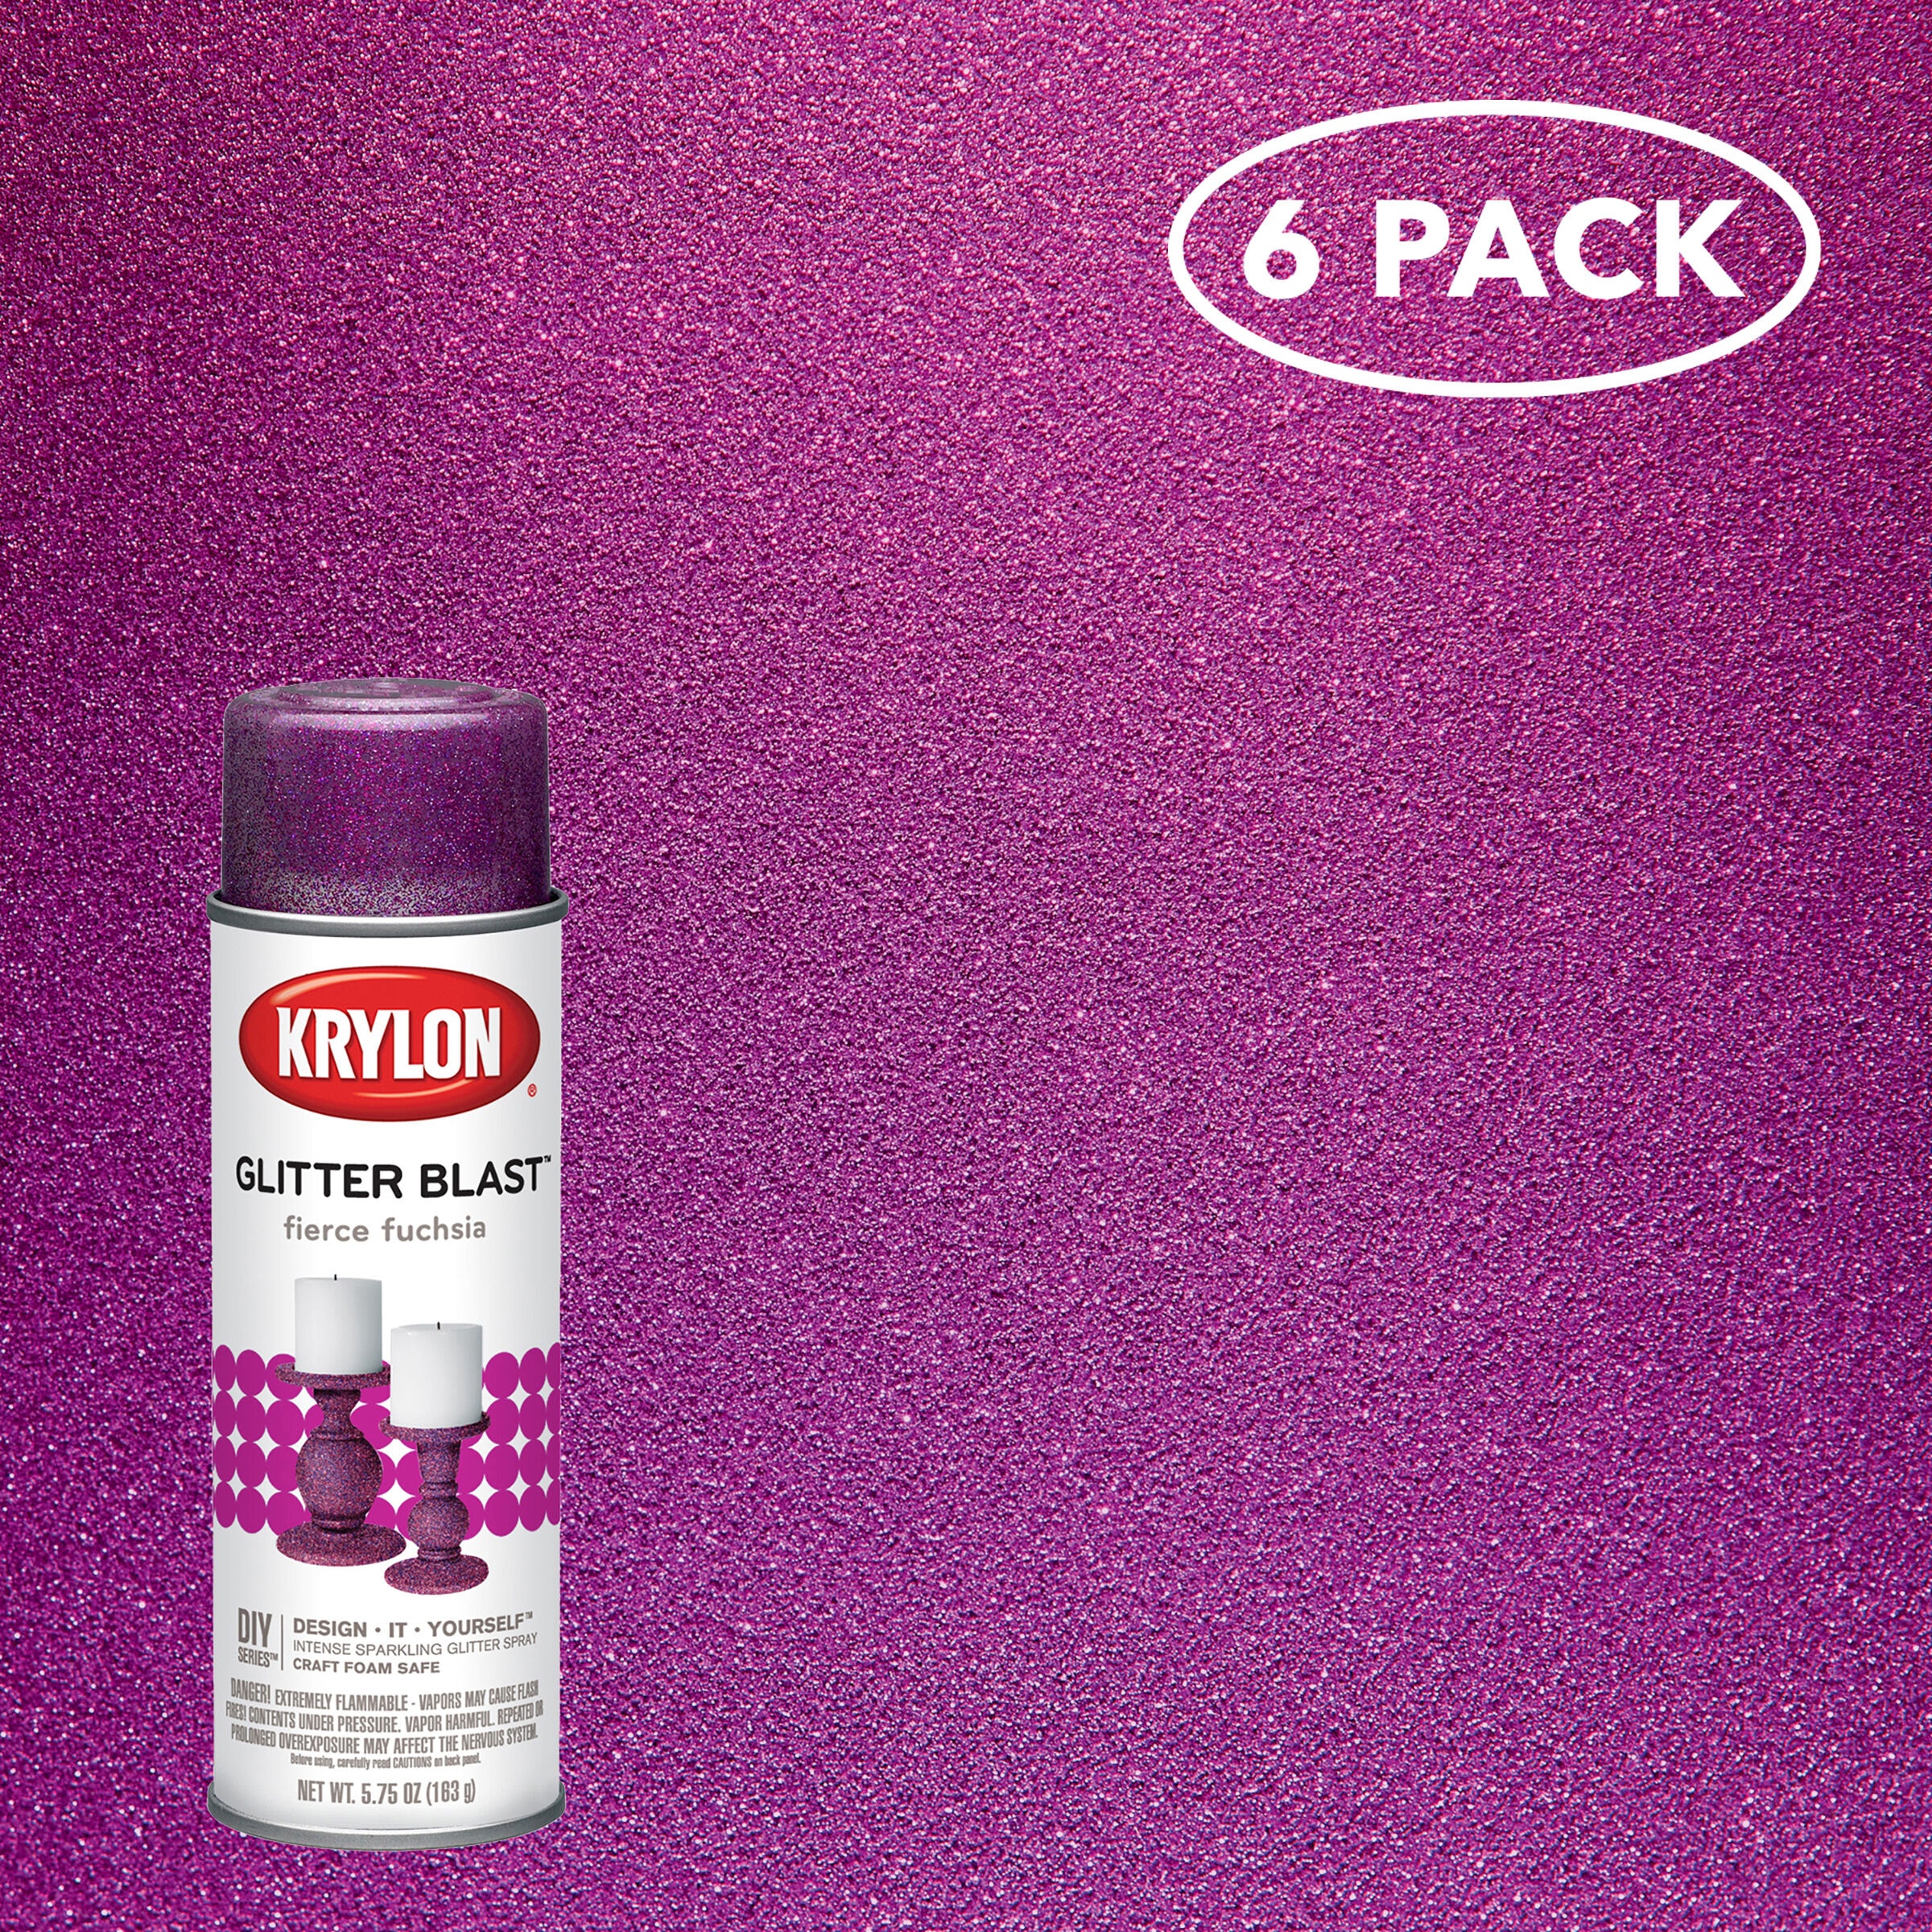 Krylon® Glitter Blast™ Glitter Spray Paint - Twilight Sky, 5.75 oz